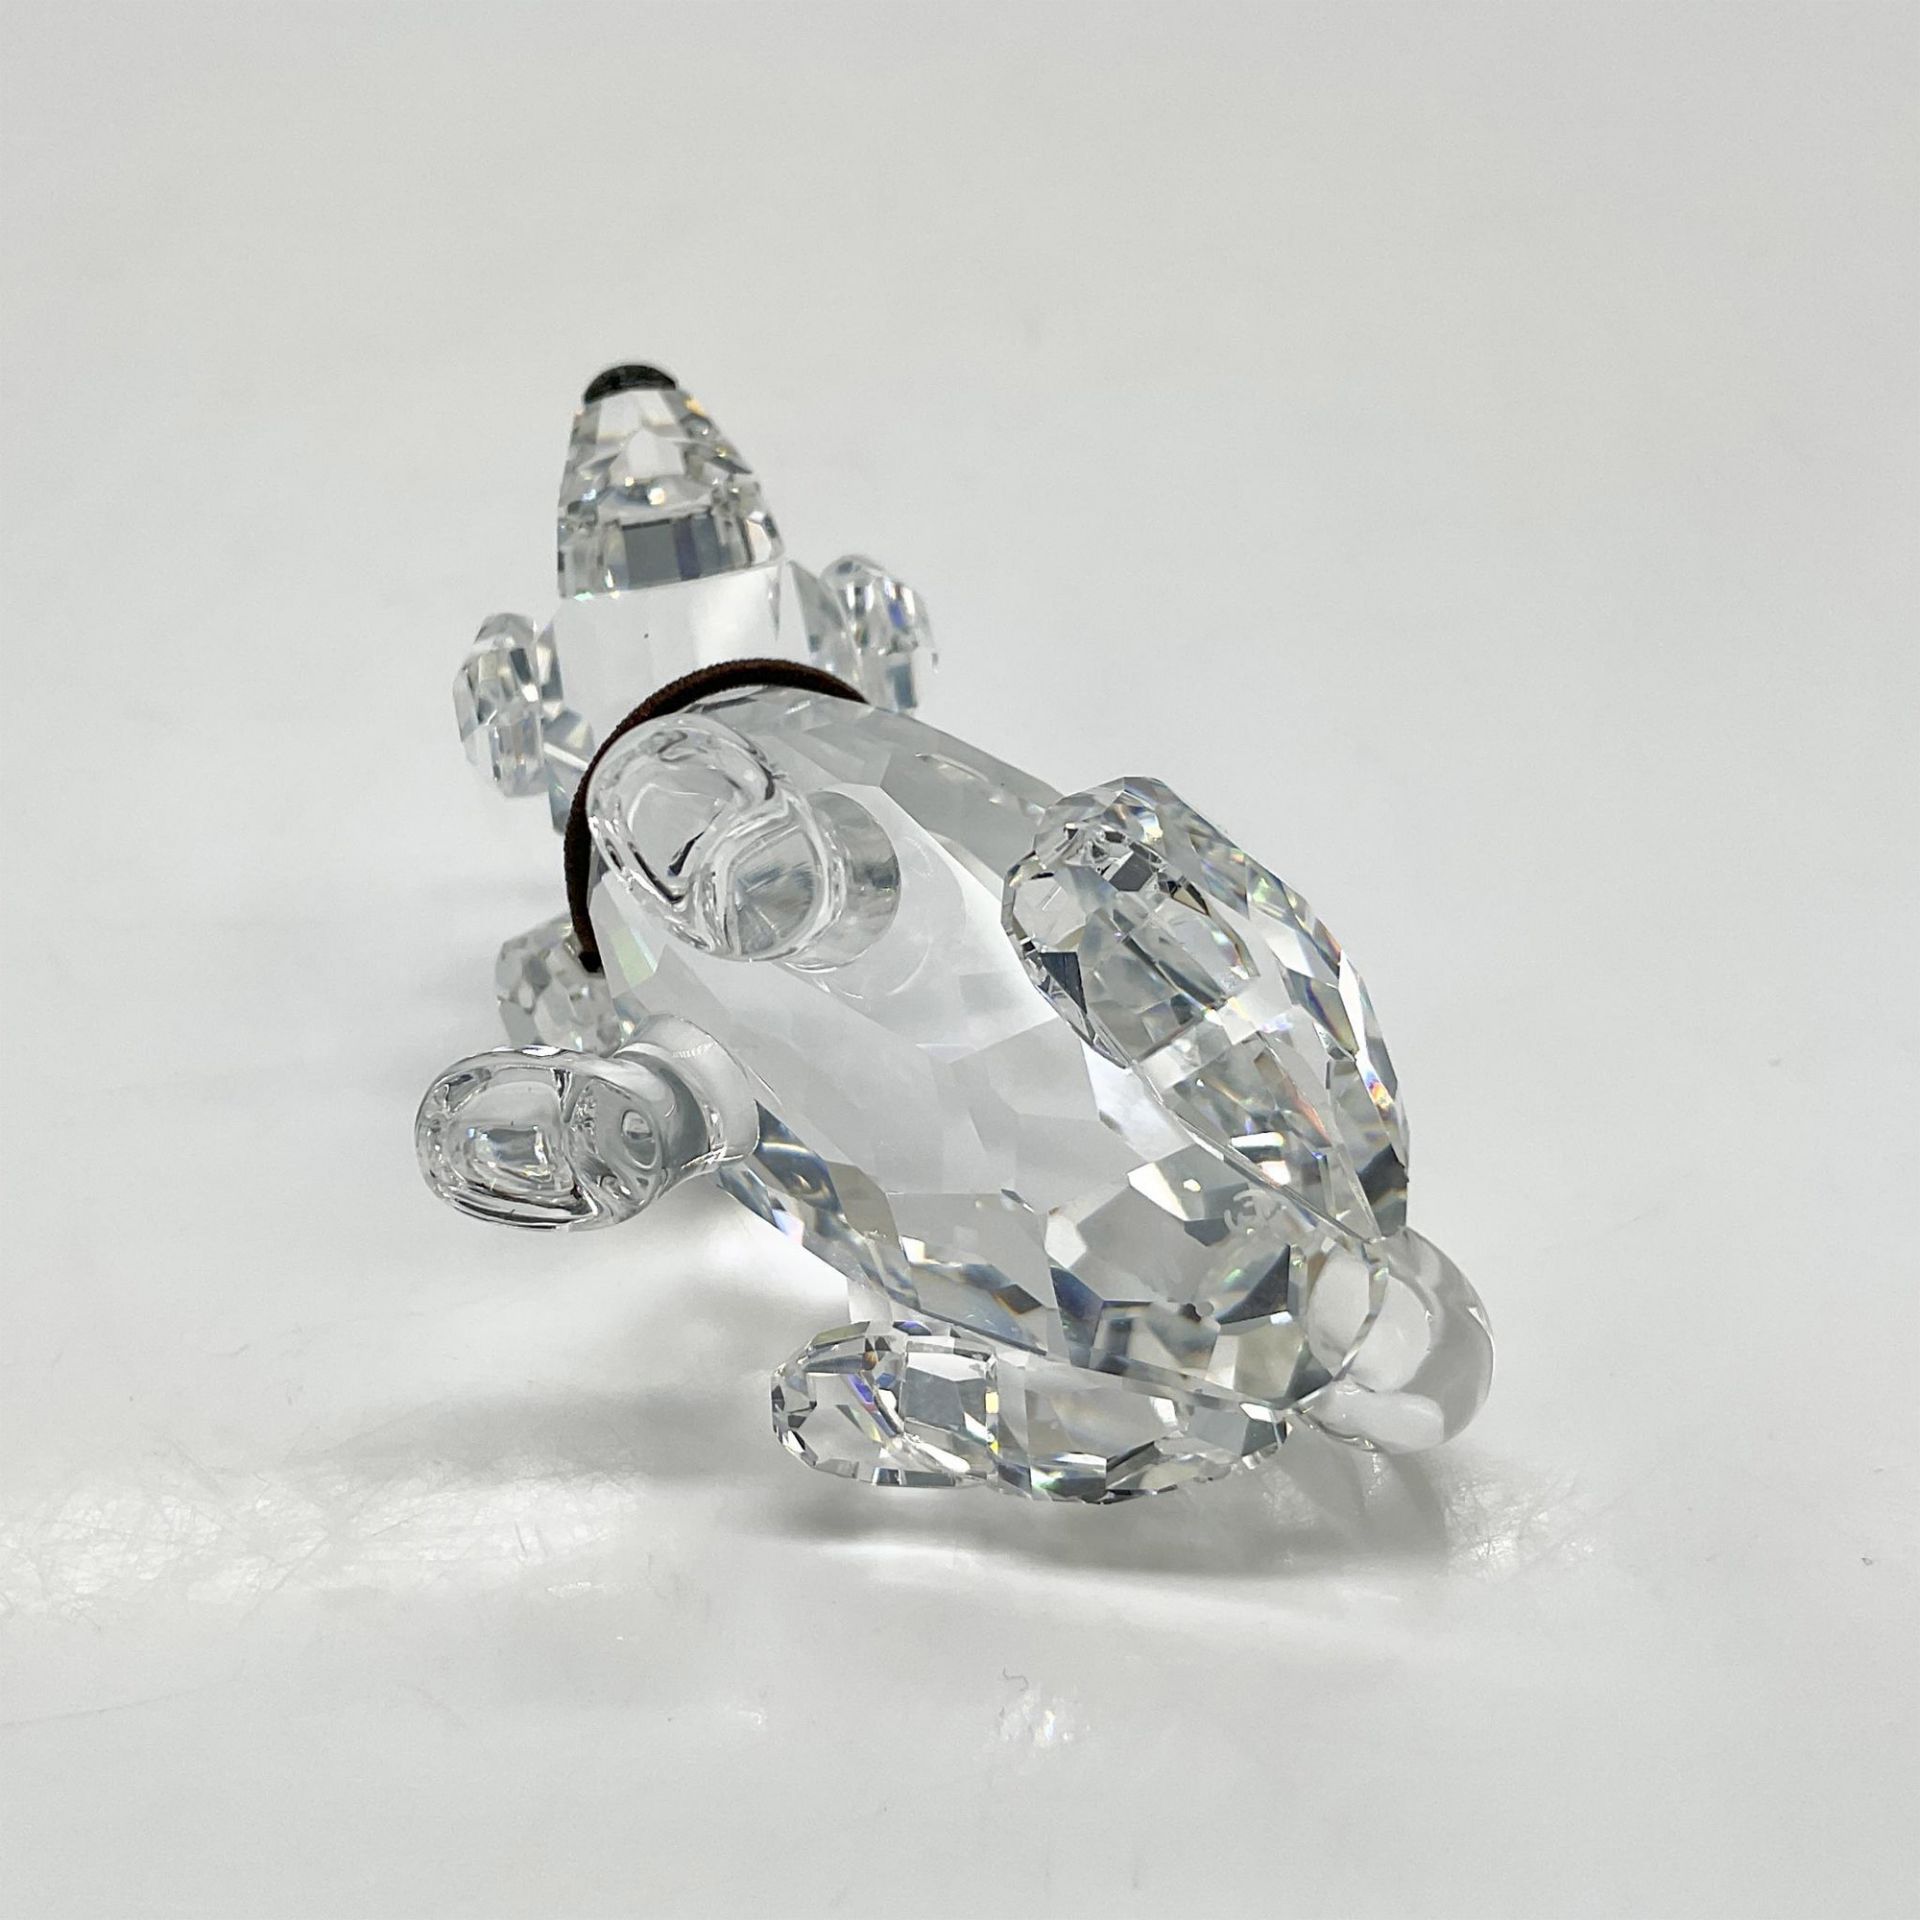 Swarovski Crystal Figurine, St. Bernard Puppy - Image 3 of 3